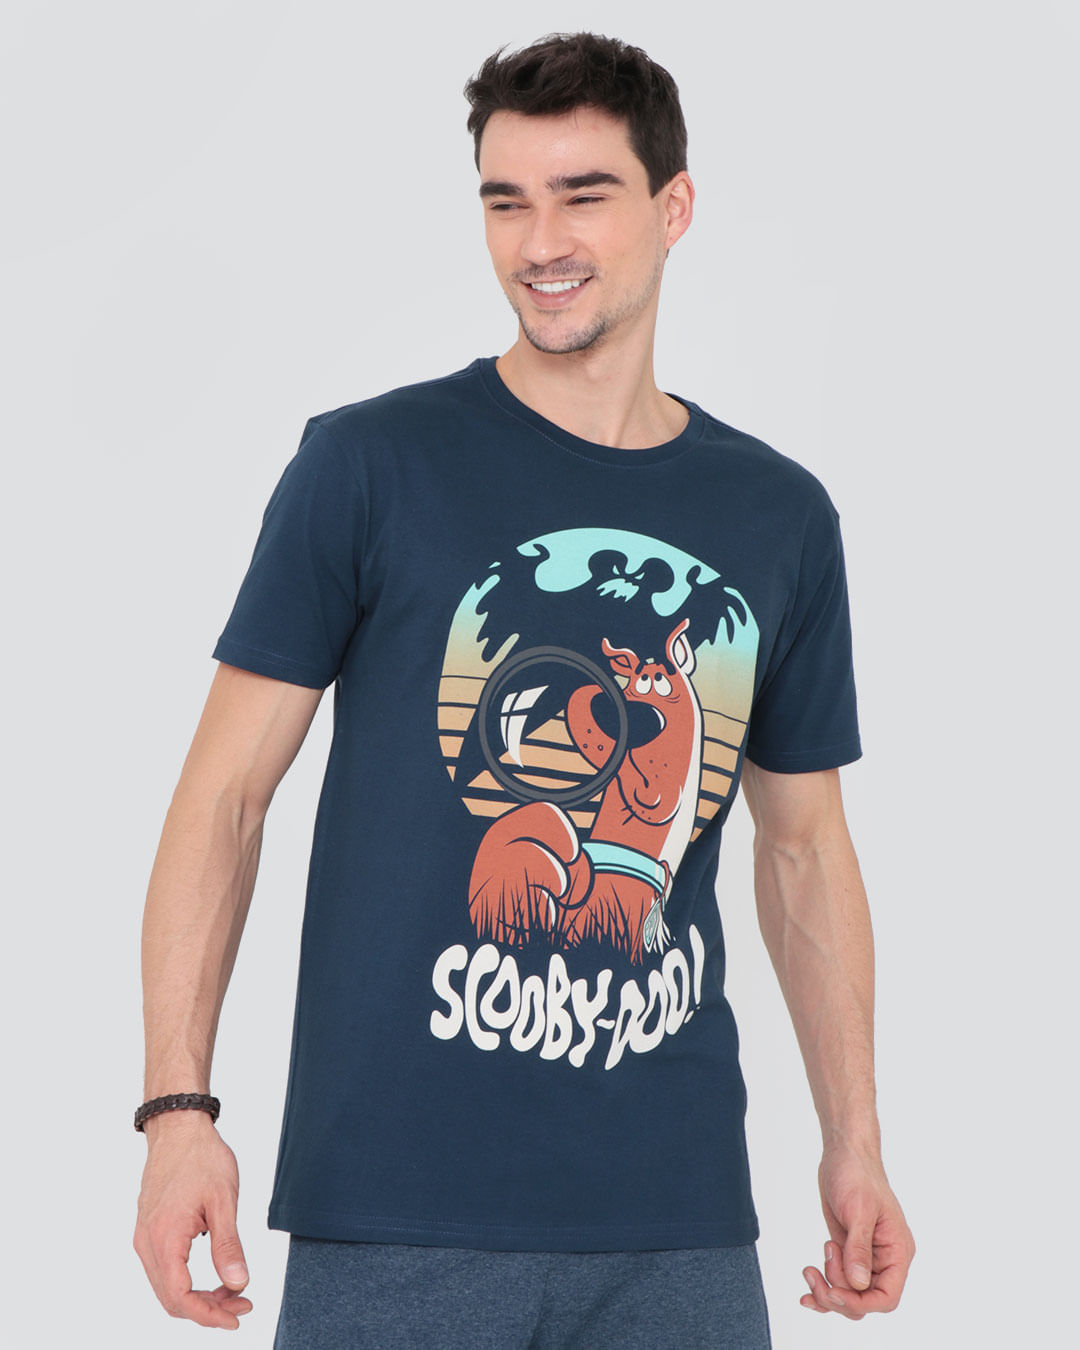 Camiseta Estampa Scooby Doo Azul Marinho   Lojas Torra   Lojas Torra